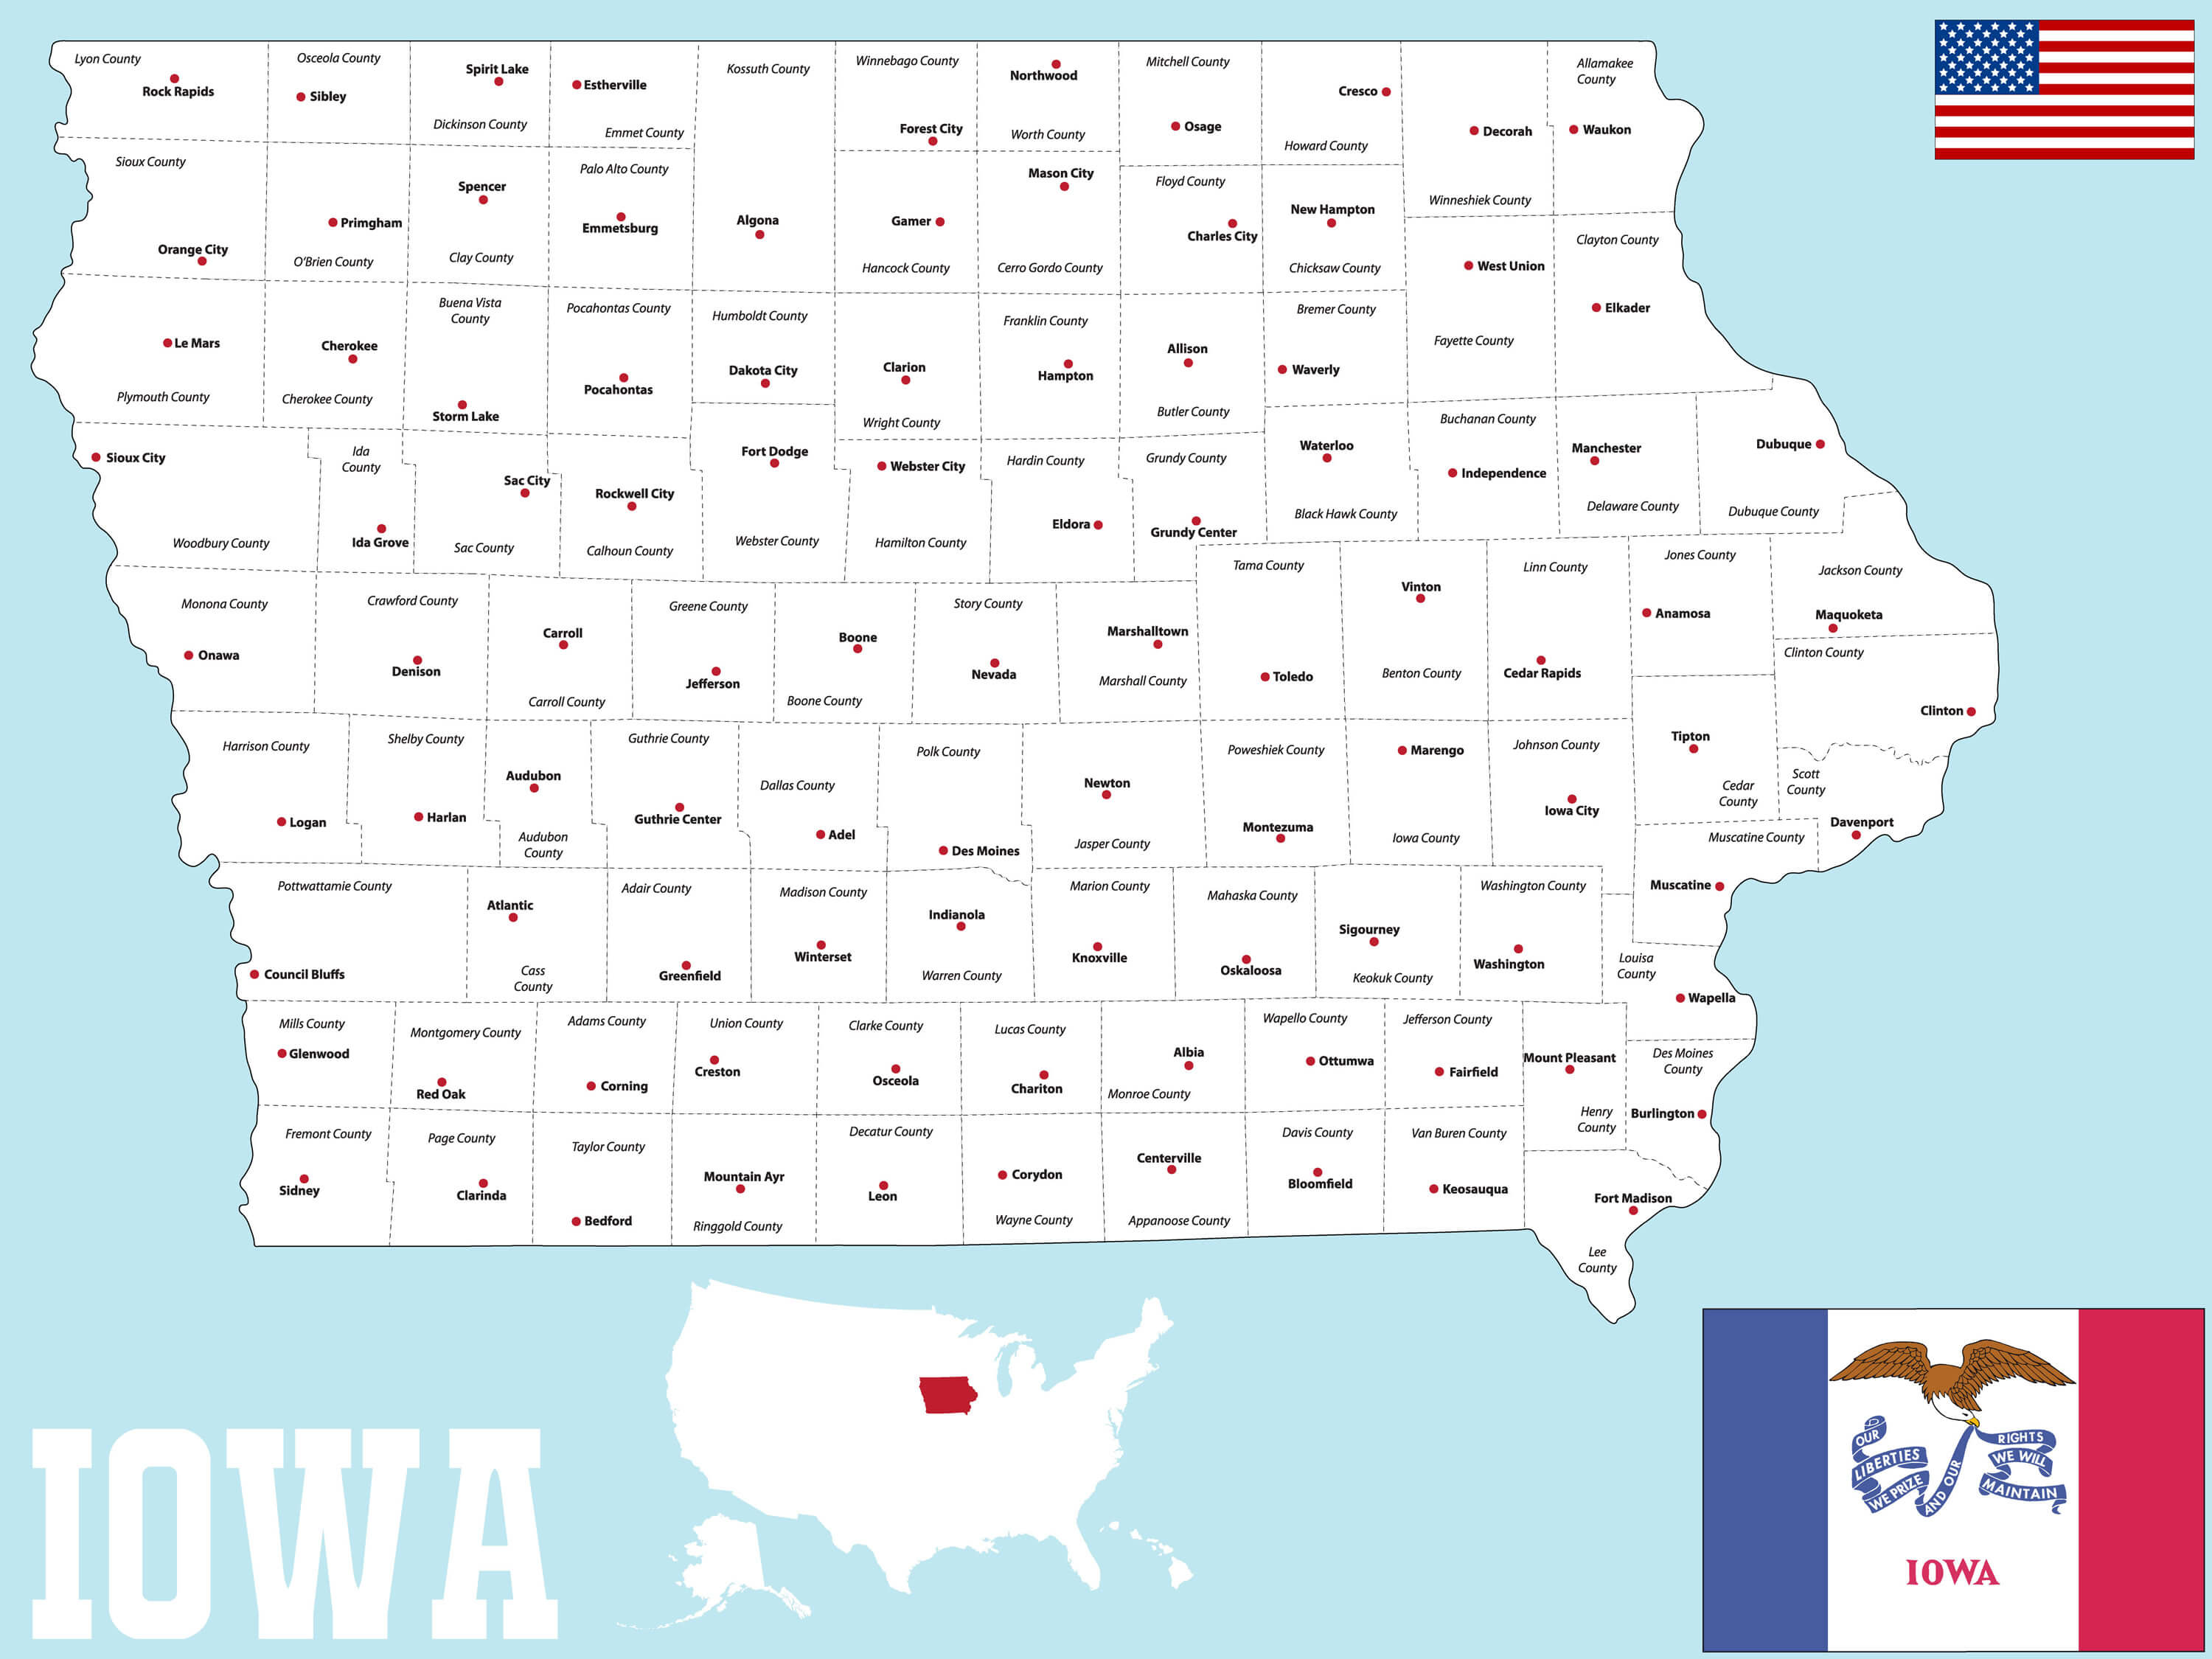 Iowa detailed Map